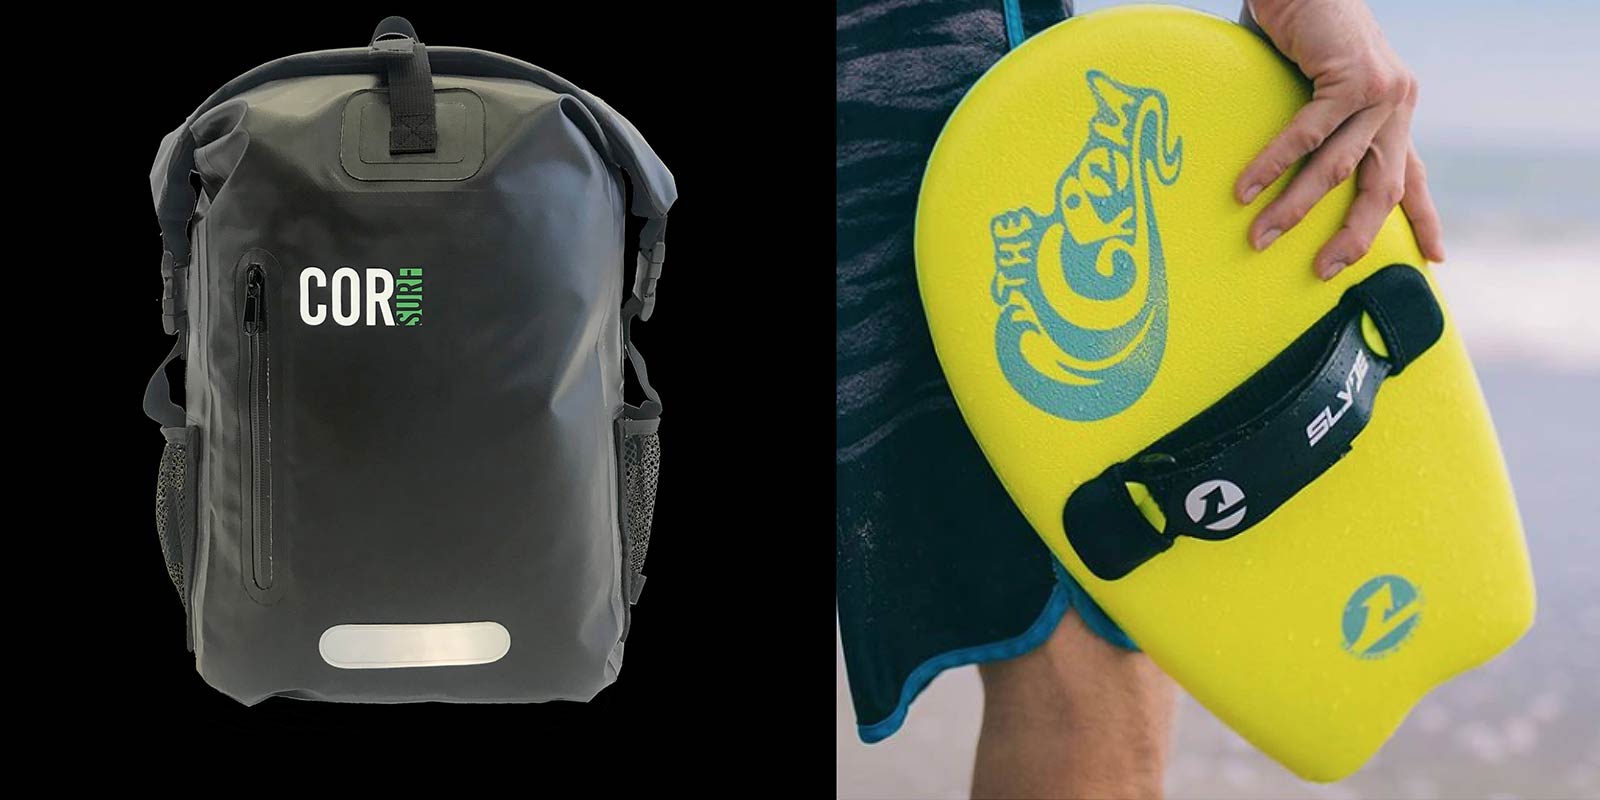 Giveaway Alert 💥Cor Surf Waterproof Dry BackPack x Slyde Handboards Gr